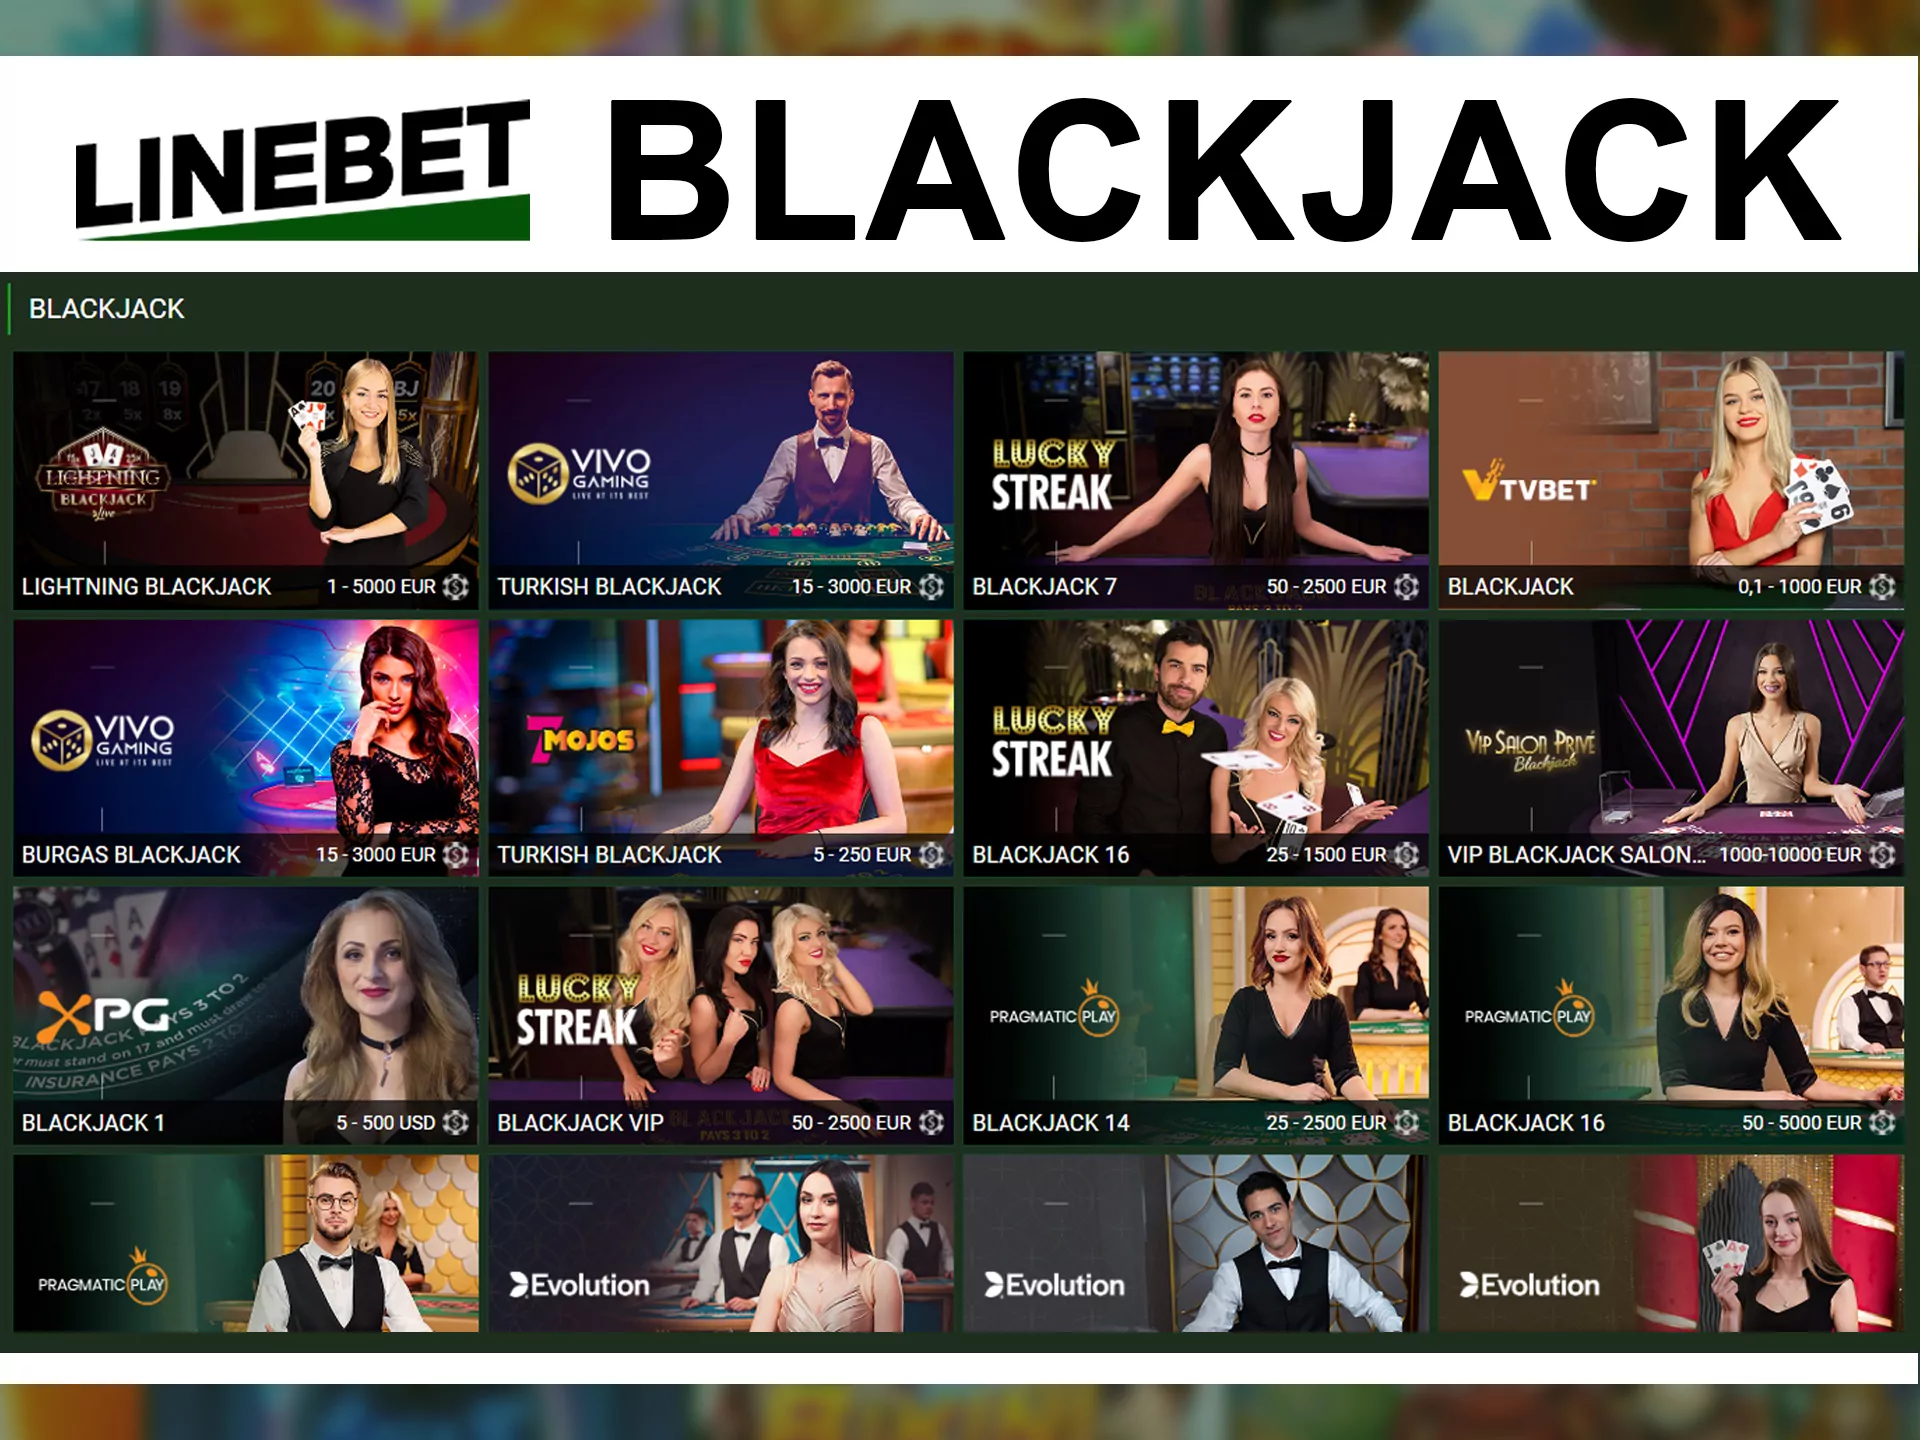 Play blackjack online at Linebet.